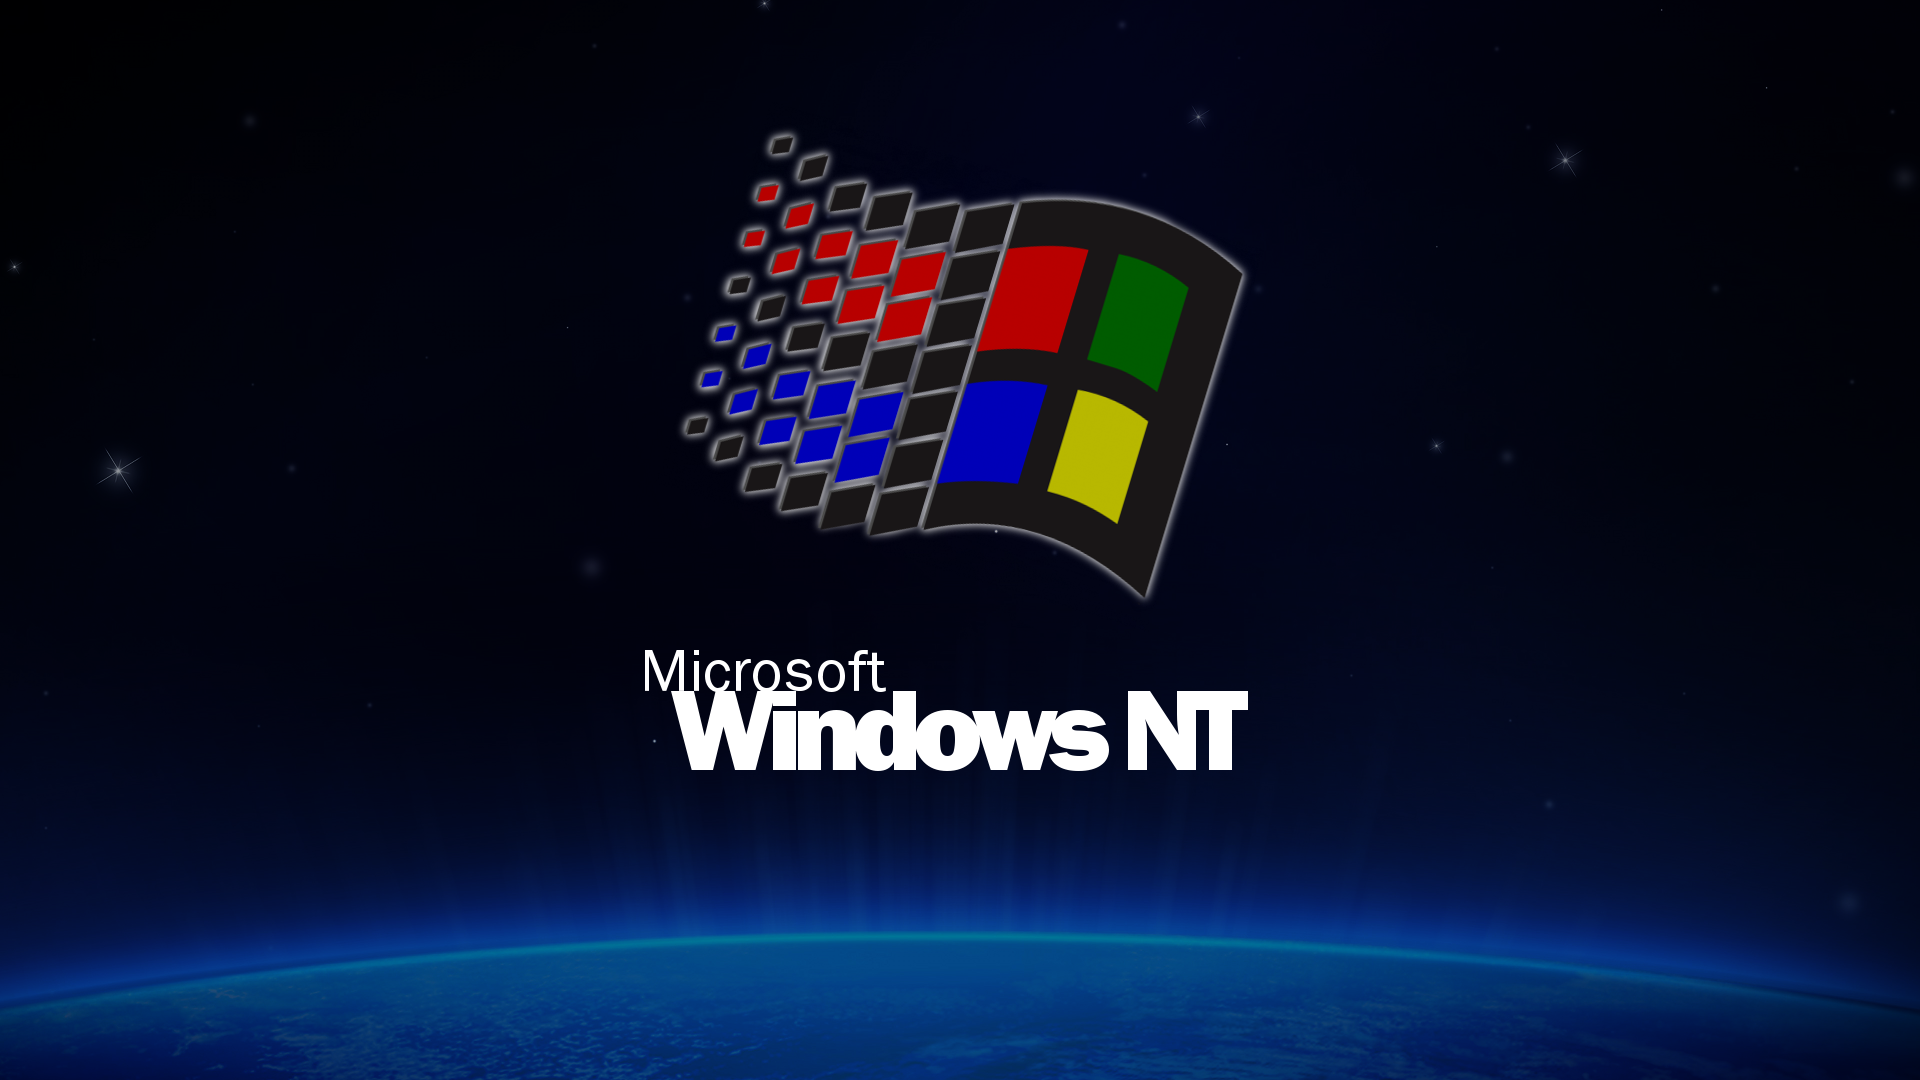 Windows nt build 9200. Windows NT 4 Workstation. Виндовс НТ 4.0. ОС MS Windows NT 4.0 Server. Windows NT 3.1 Workstation.